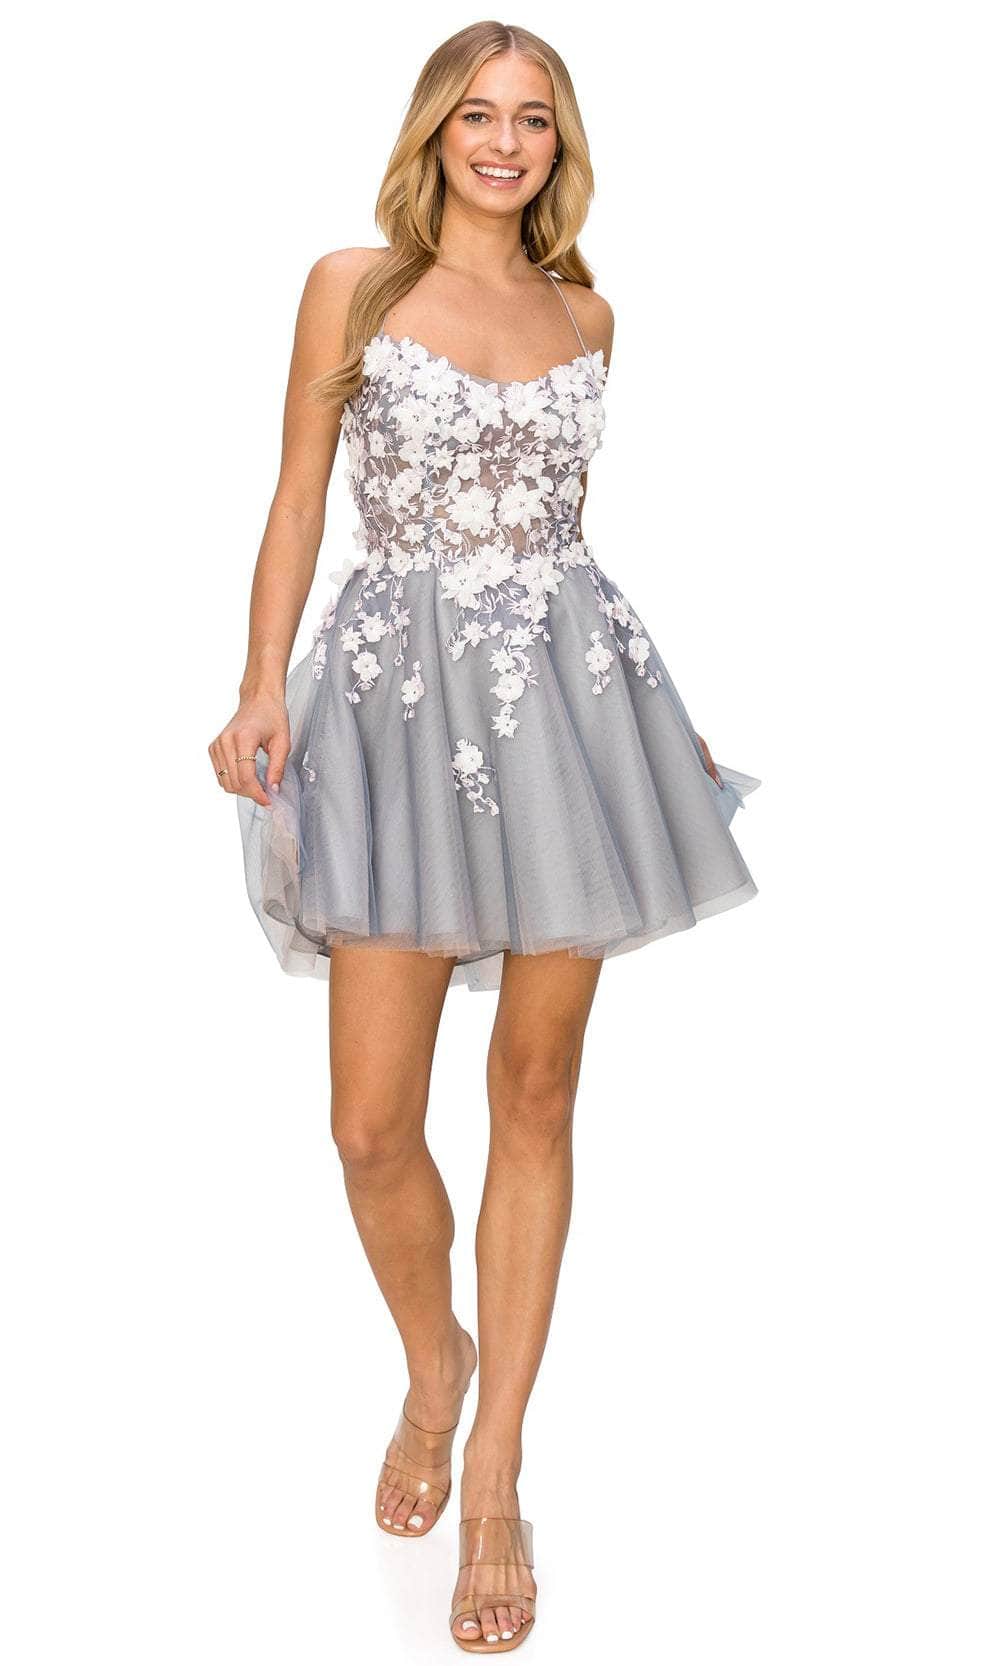 Cinderella Couture 8053J - 3D Floral Embellished A-line Dress Special Occasion Dress